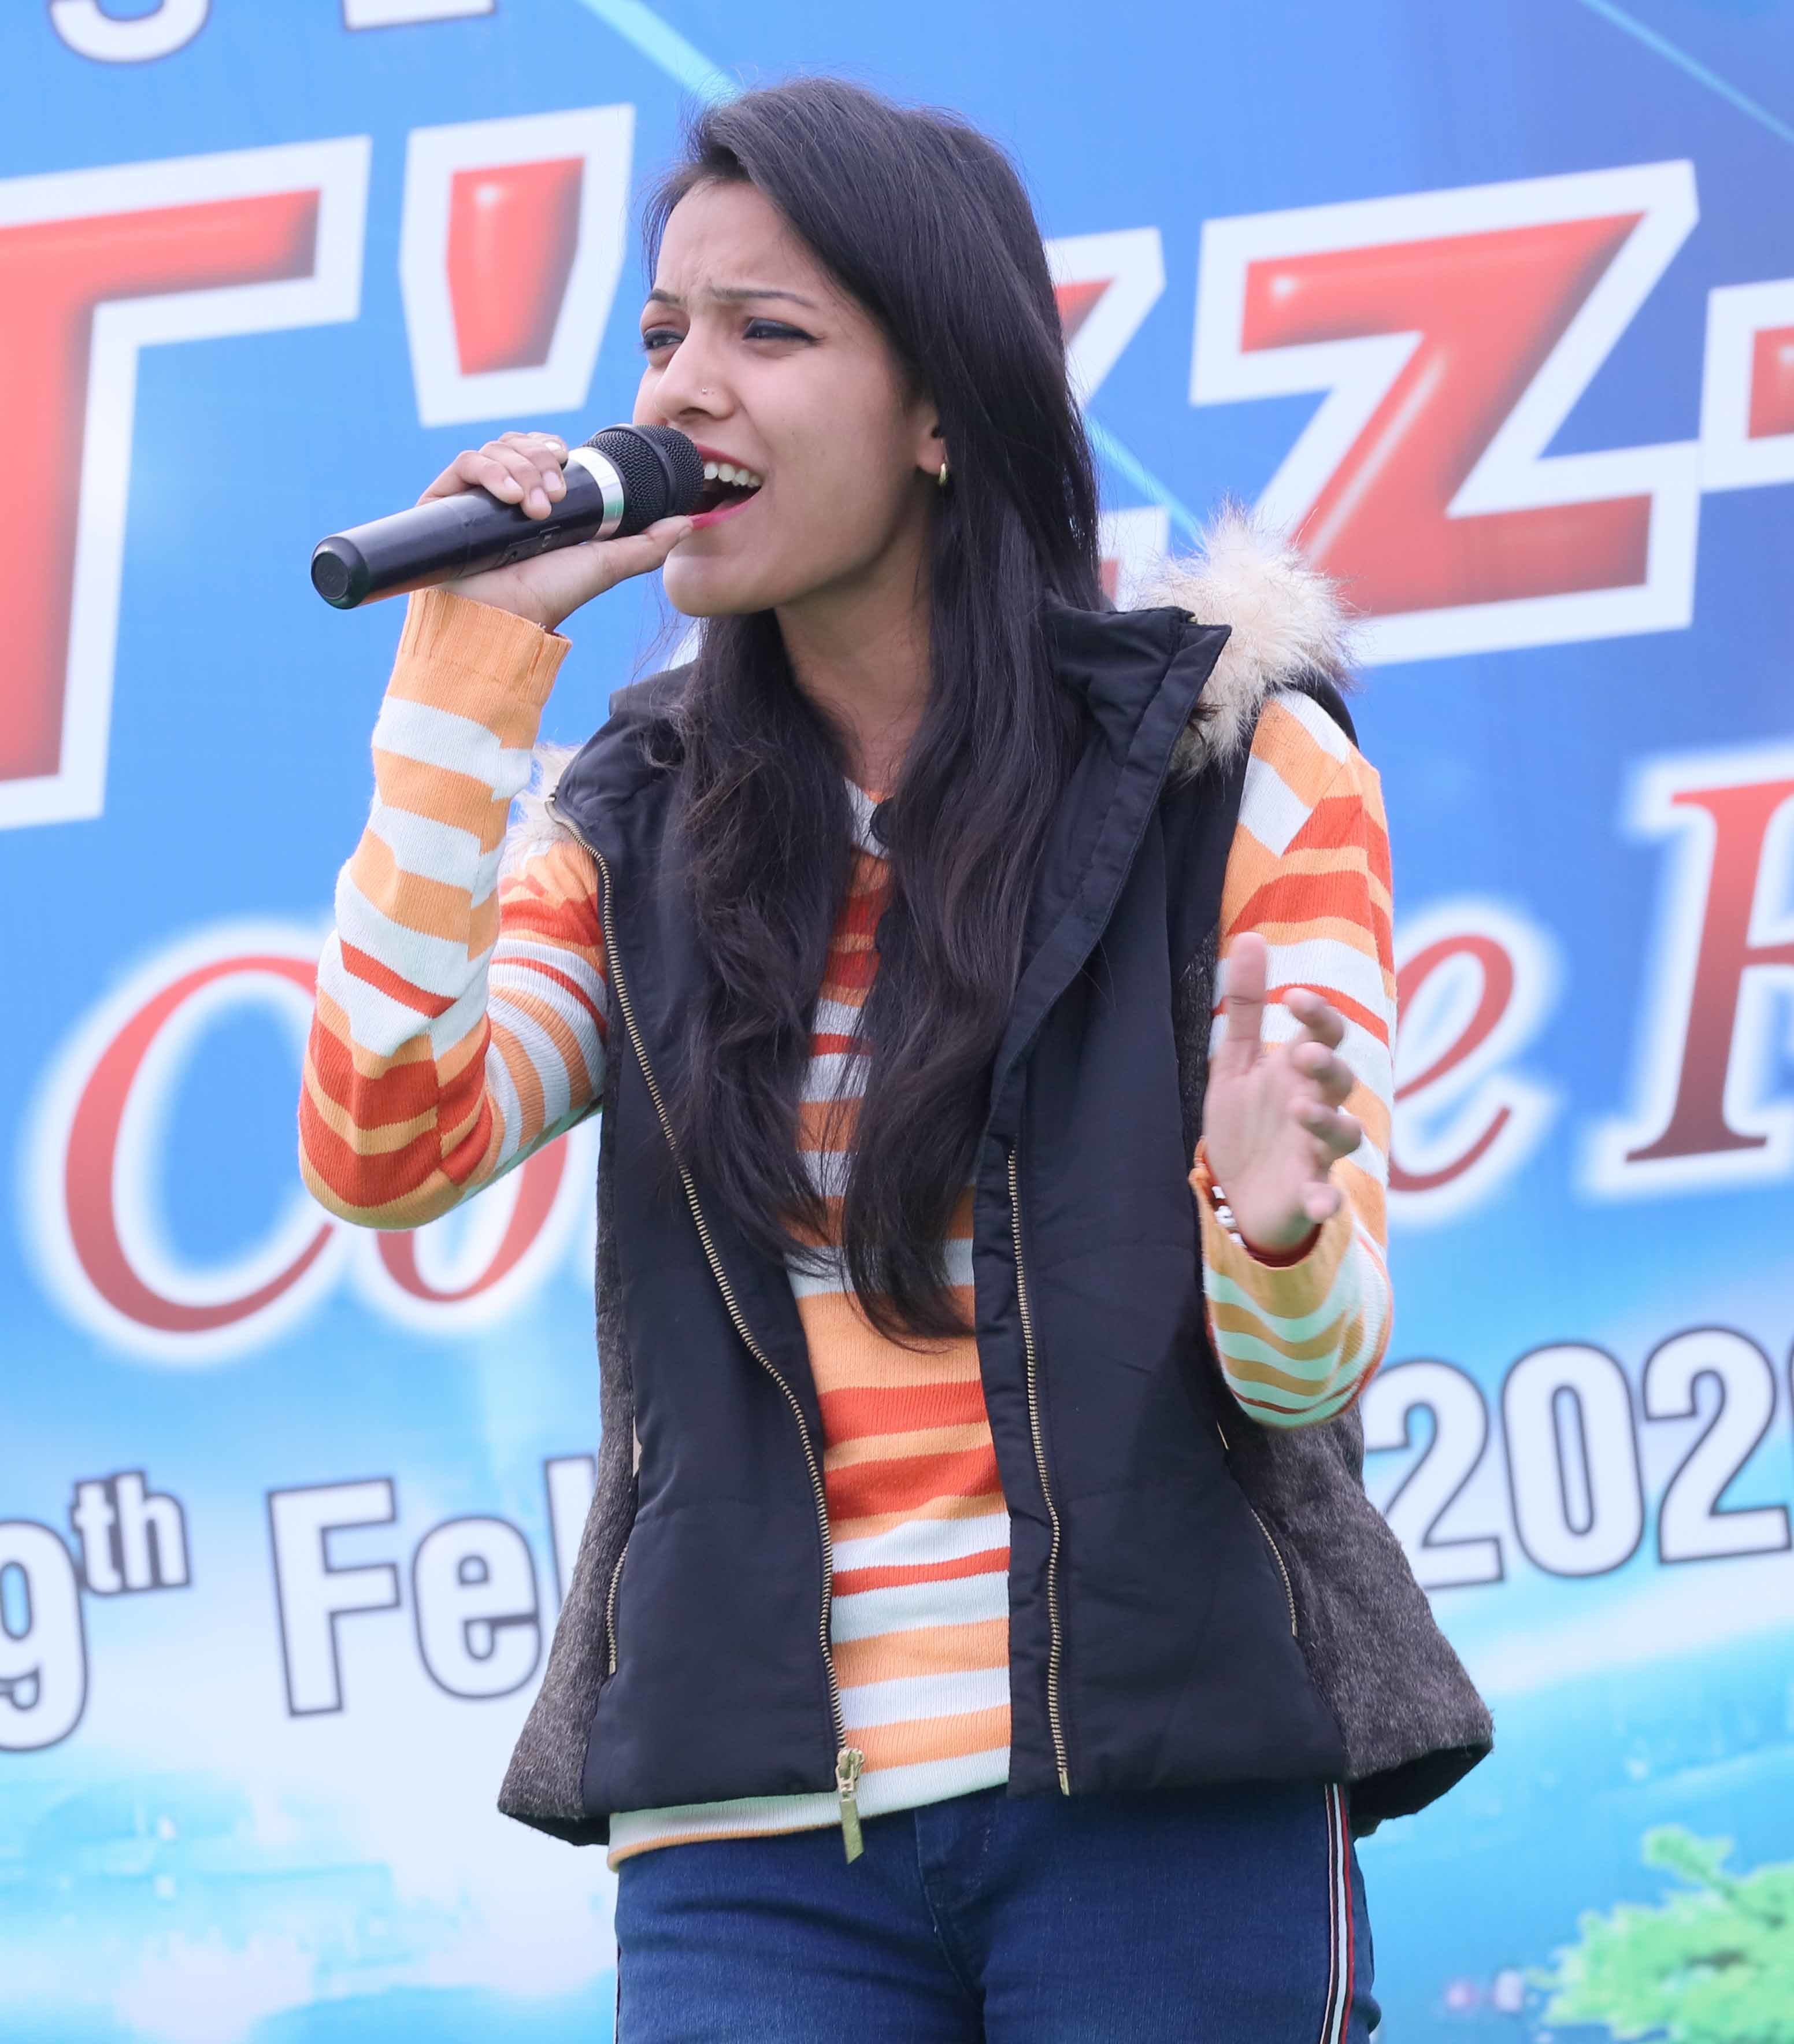 Kirti Kushwaha showcasing her singing talent during the fest